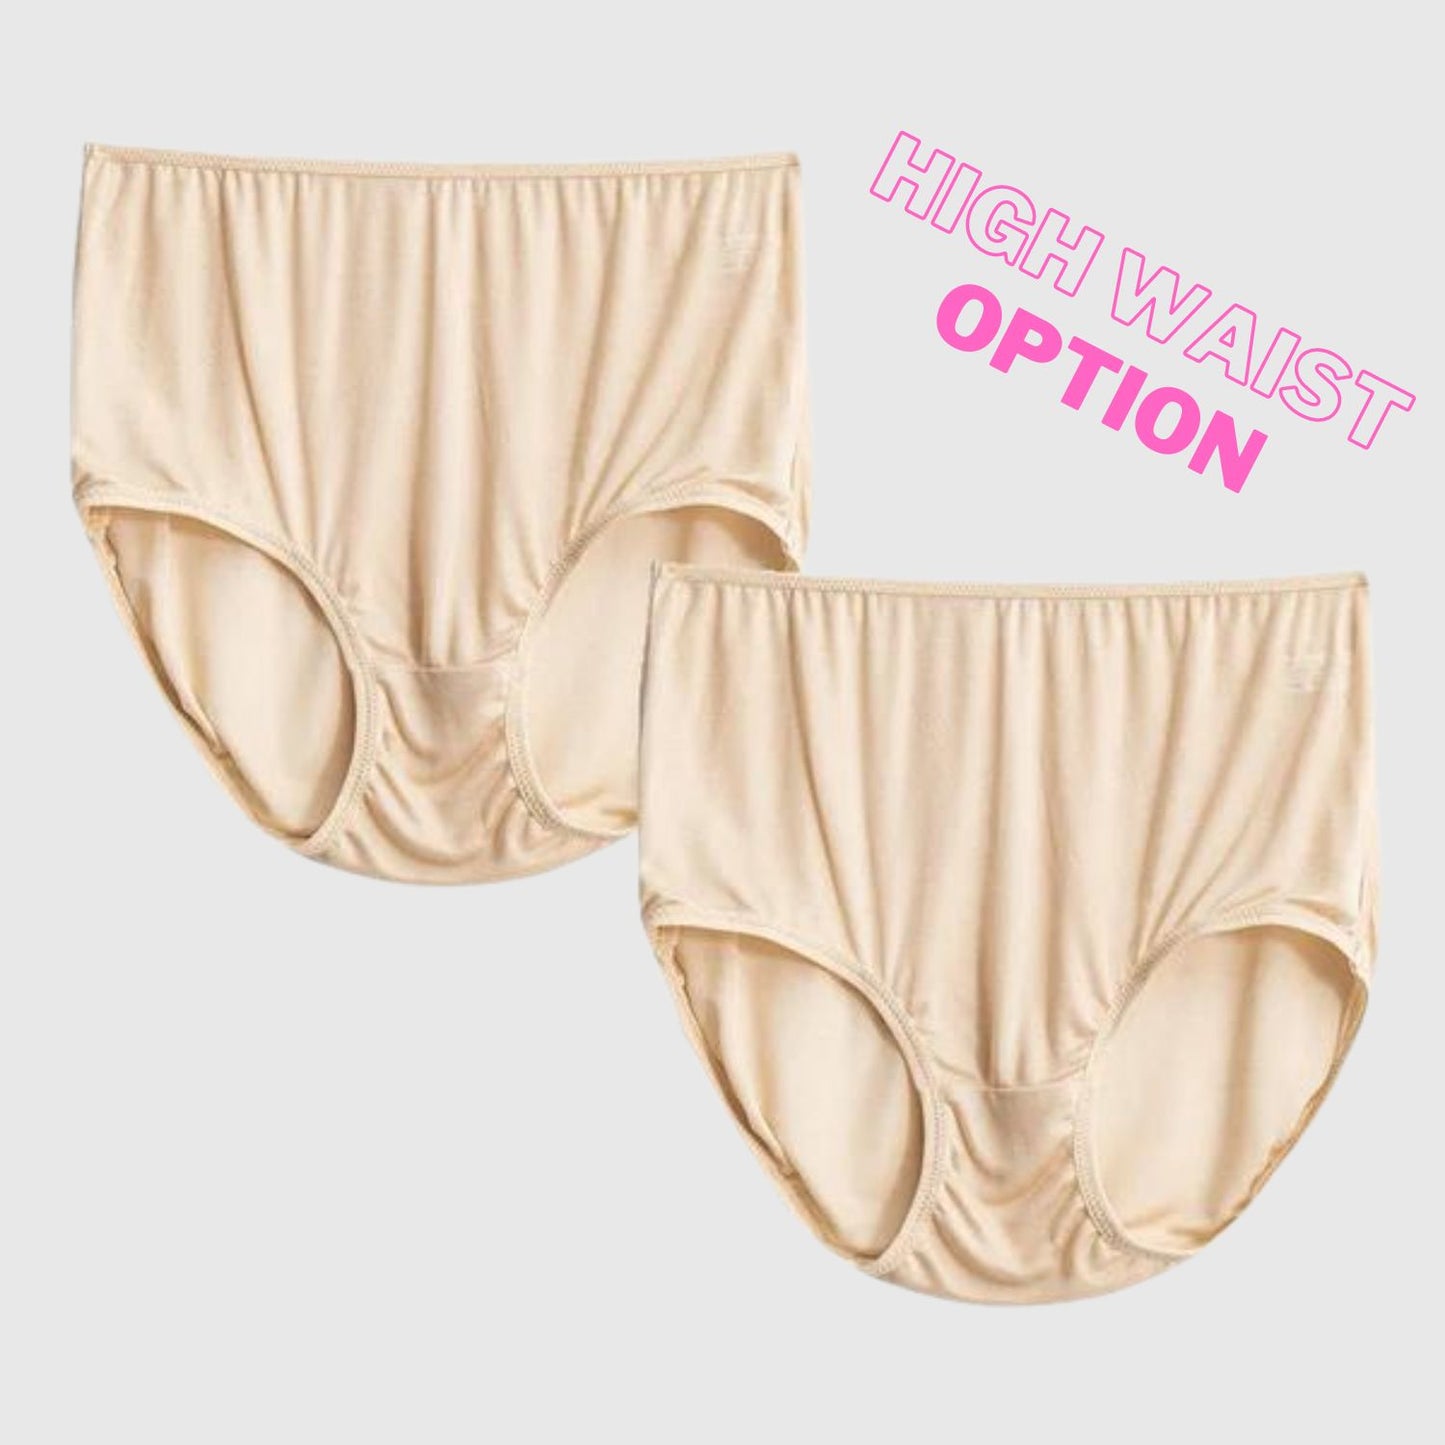 Women's silk panty briefs